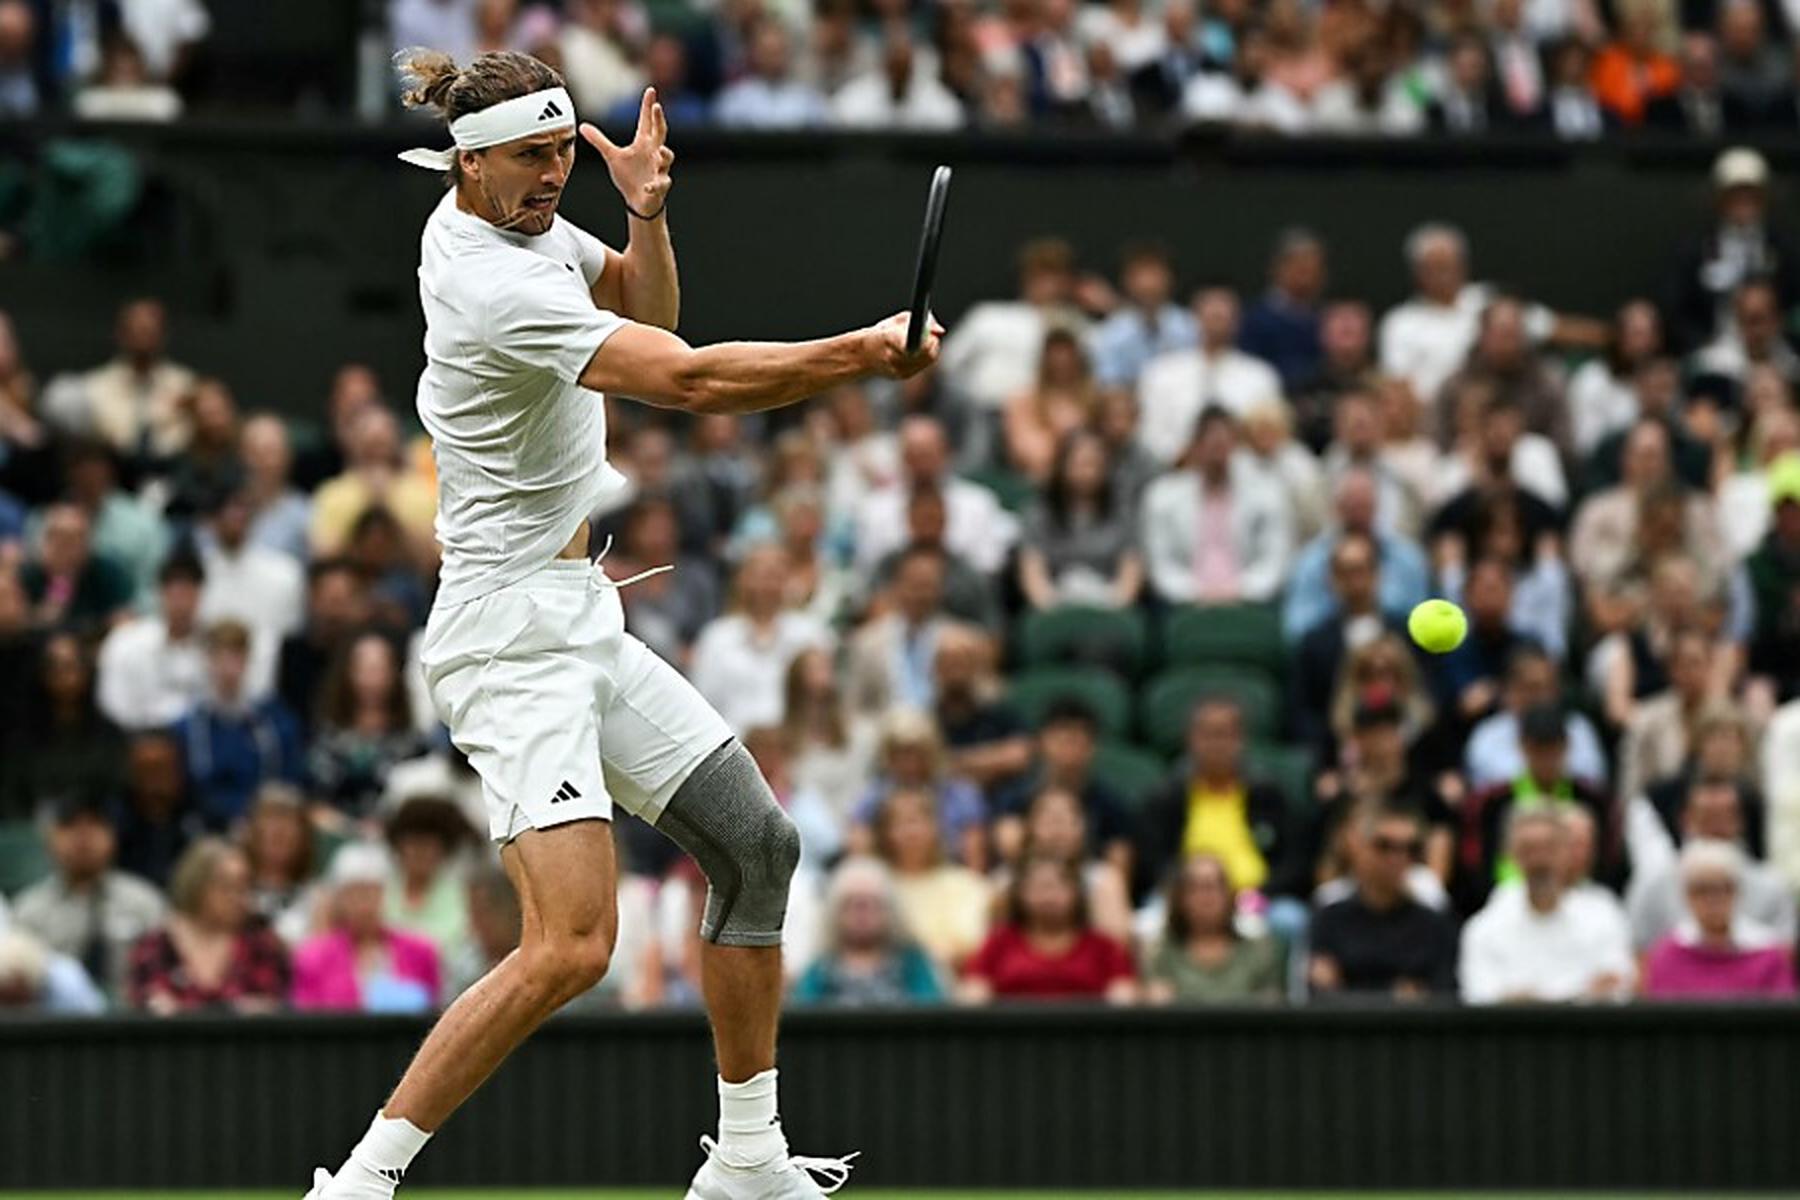 London: Zverev verpasst Wimbledon-Viertelfinale nach 2:0-Satzführung